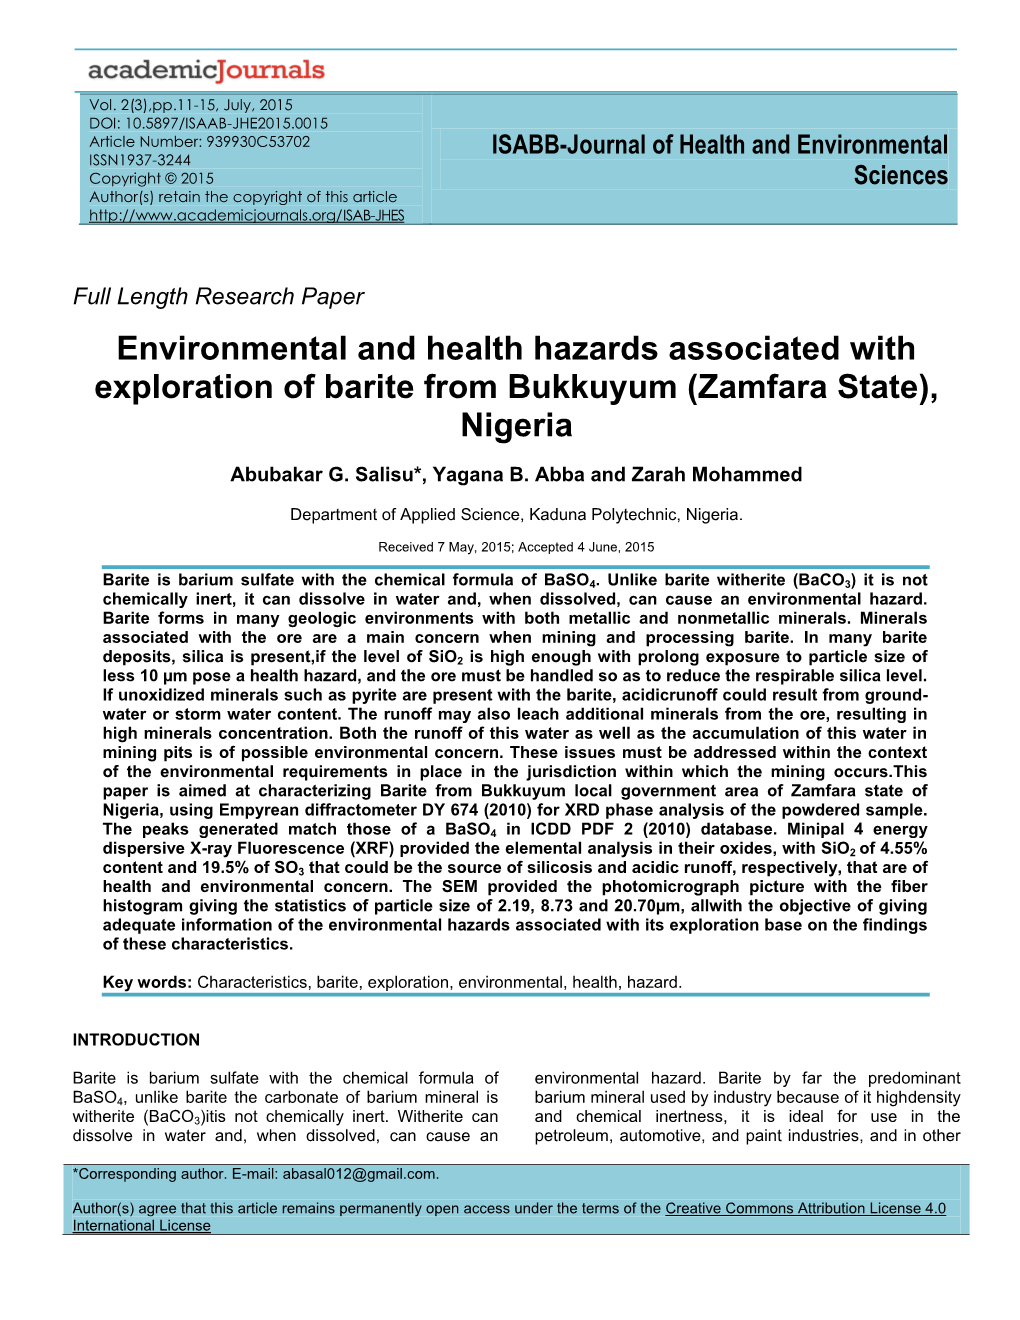 Environmental and Health Hazards Associated with Exploration of Barite from Bukkuyum (Zamfara State), Nigeria